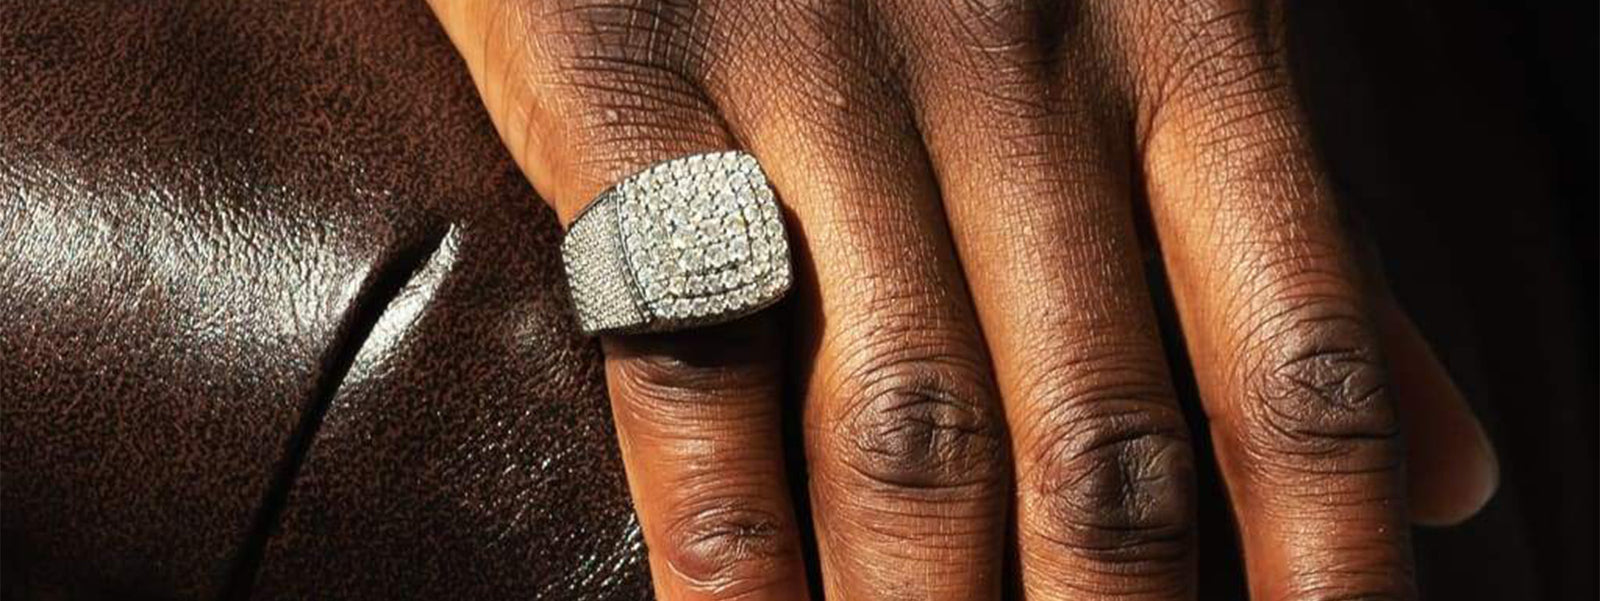 King Ring 8mm Ultra Polished Black Spinner Ring – Premium Shiny Flat  Stainless Steel Fidget Ring for Men & Women, Stainless Steel Ring – Black  6|Amazon.com